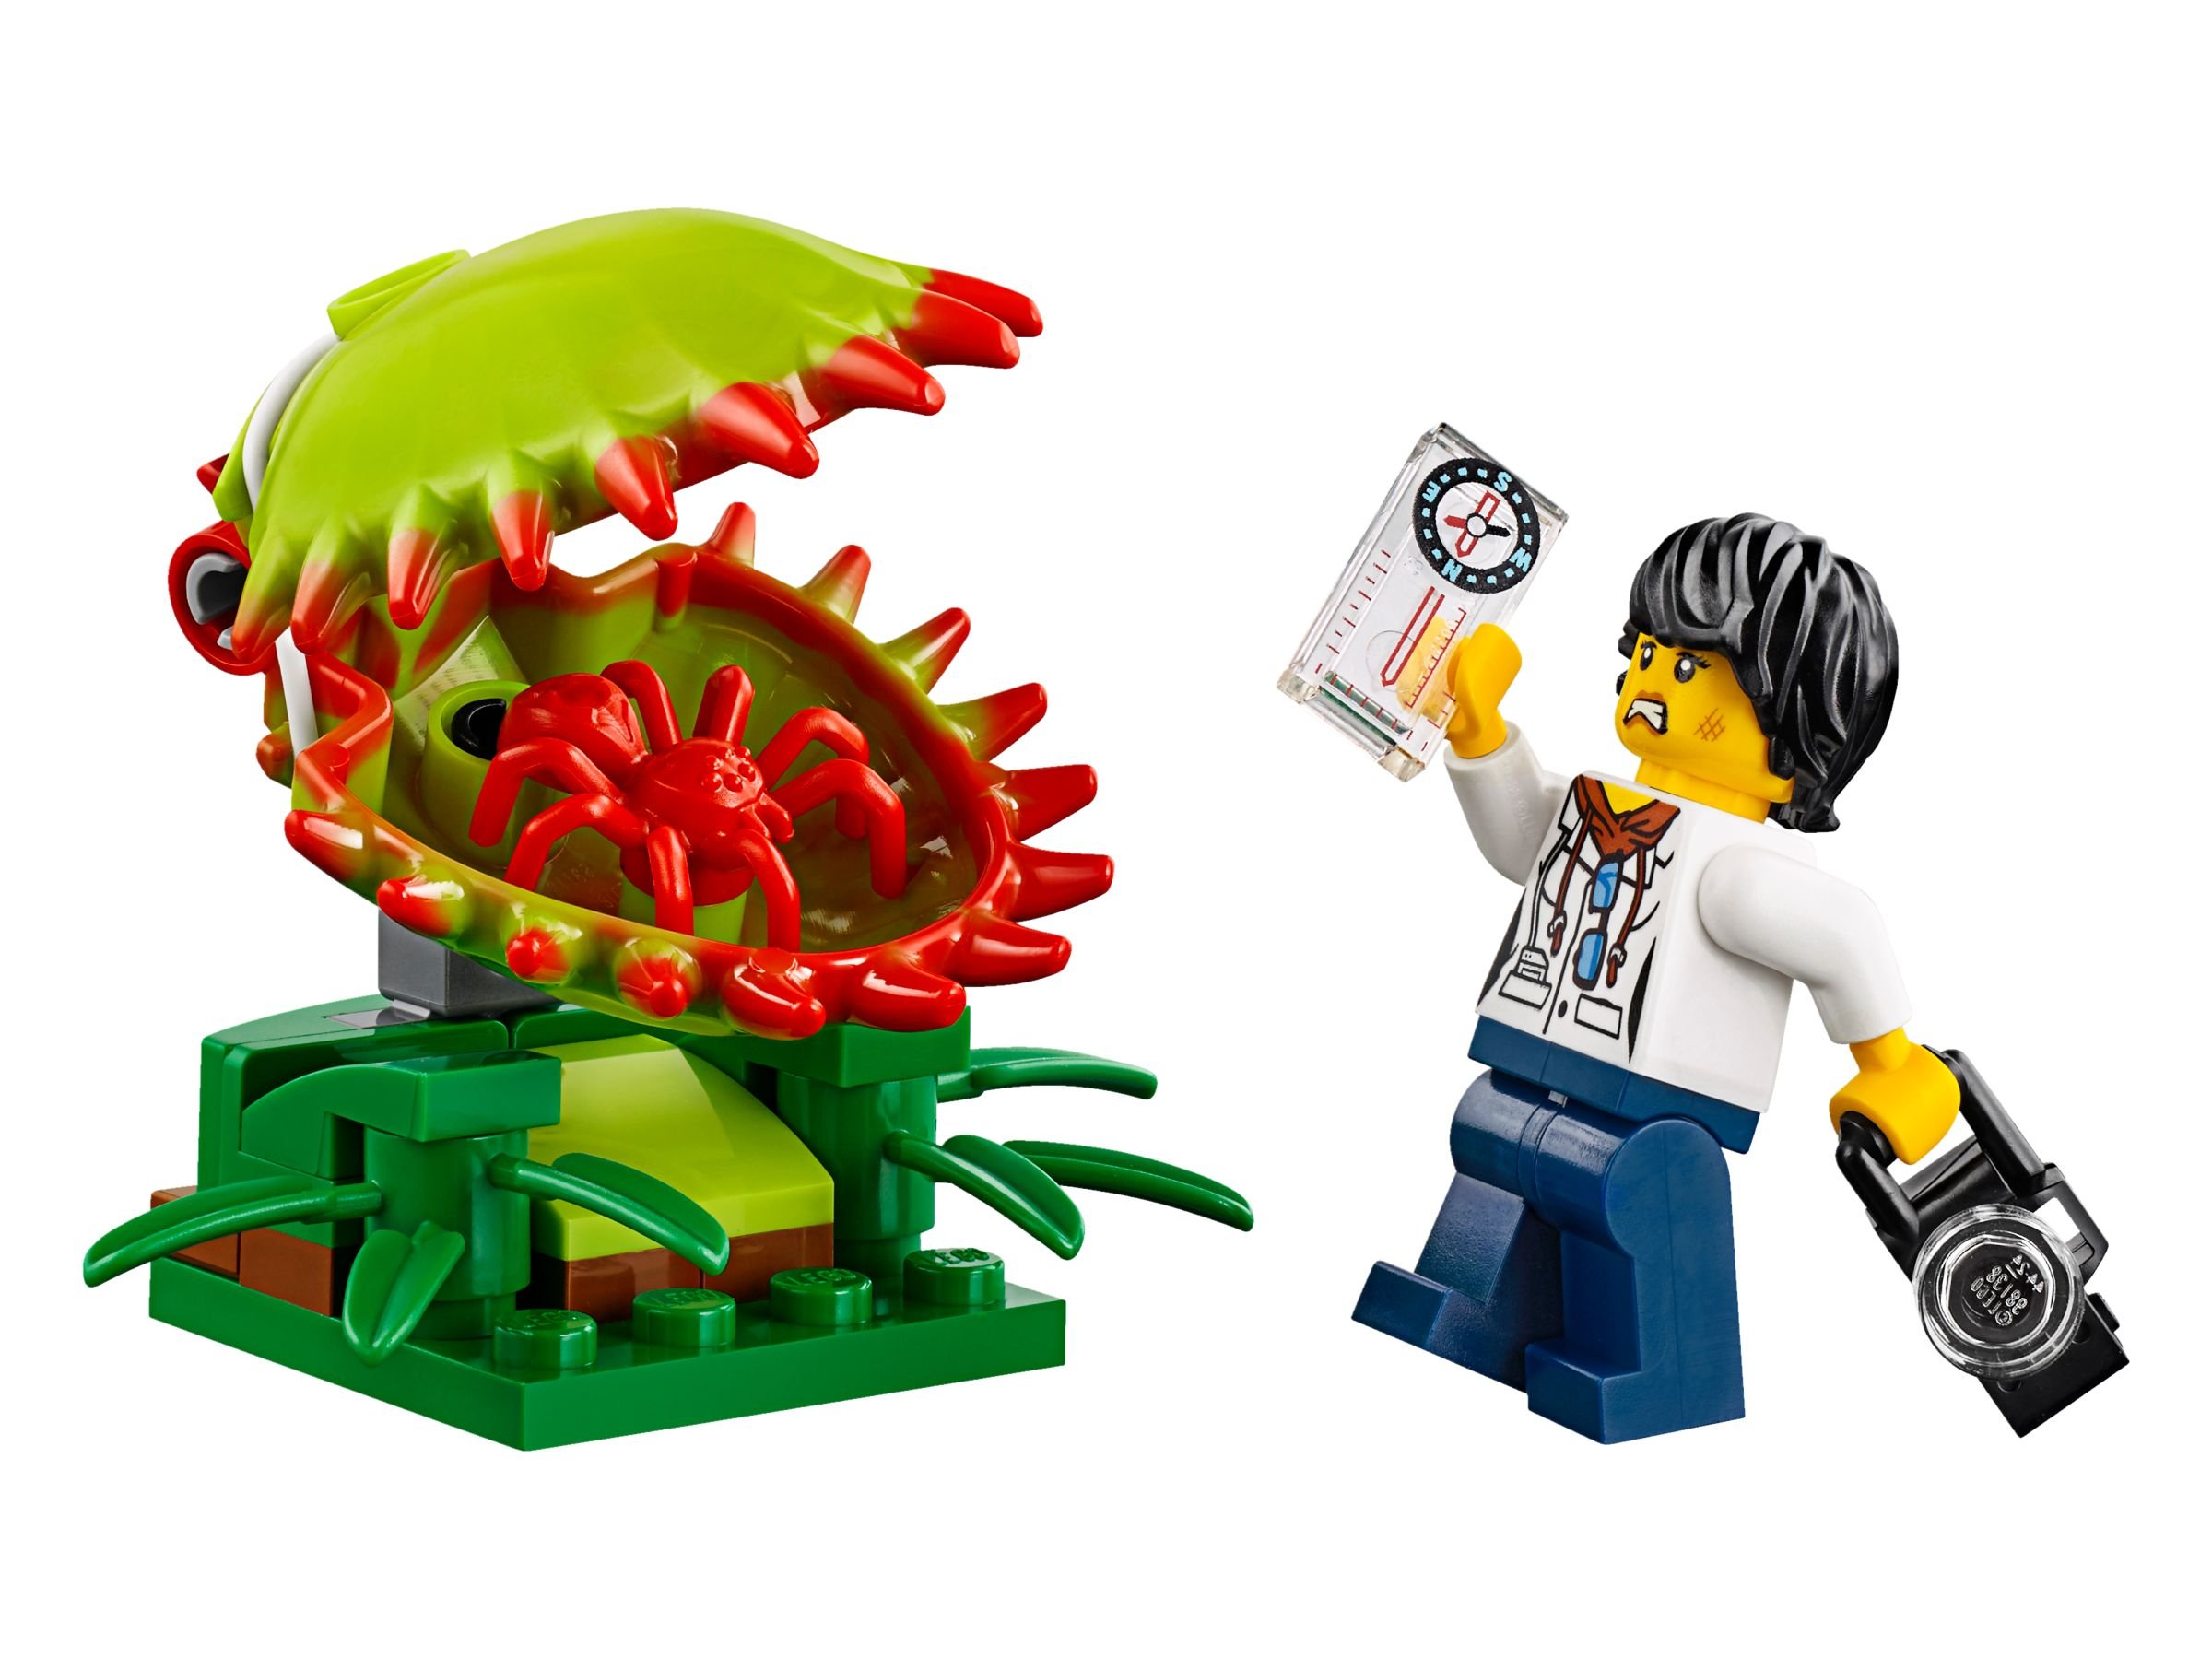 LEGO City 60160 Mobiles Dschungel-Labor LEGO_60160_alt7.jpg